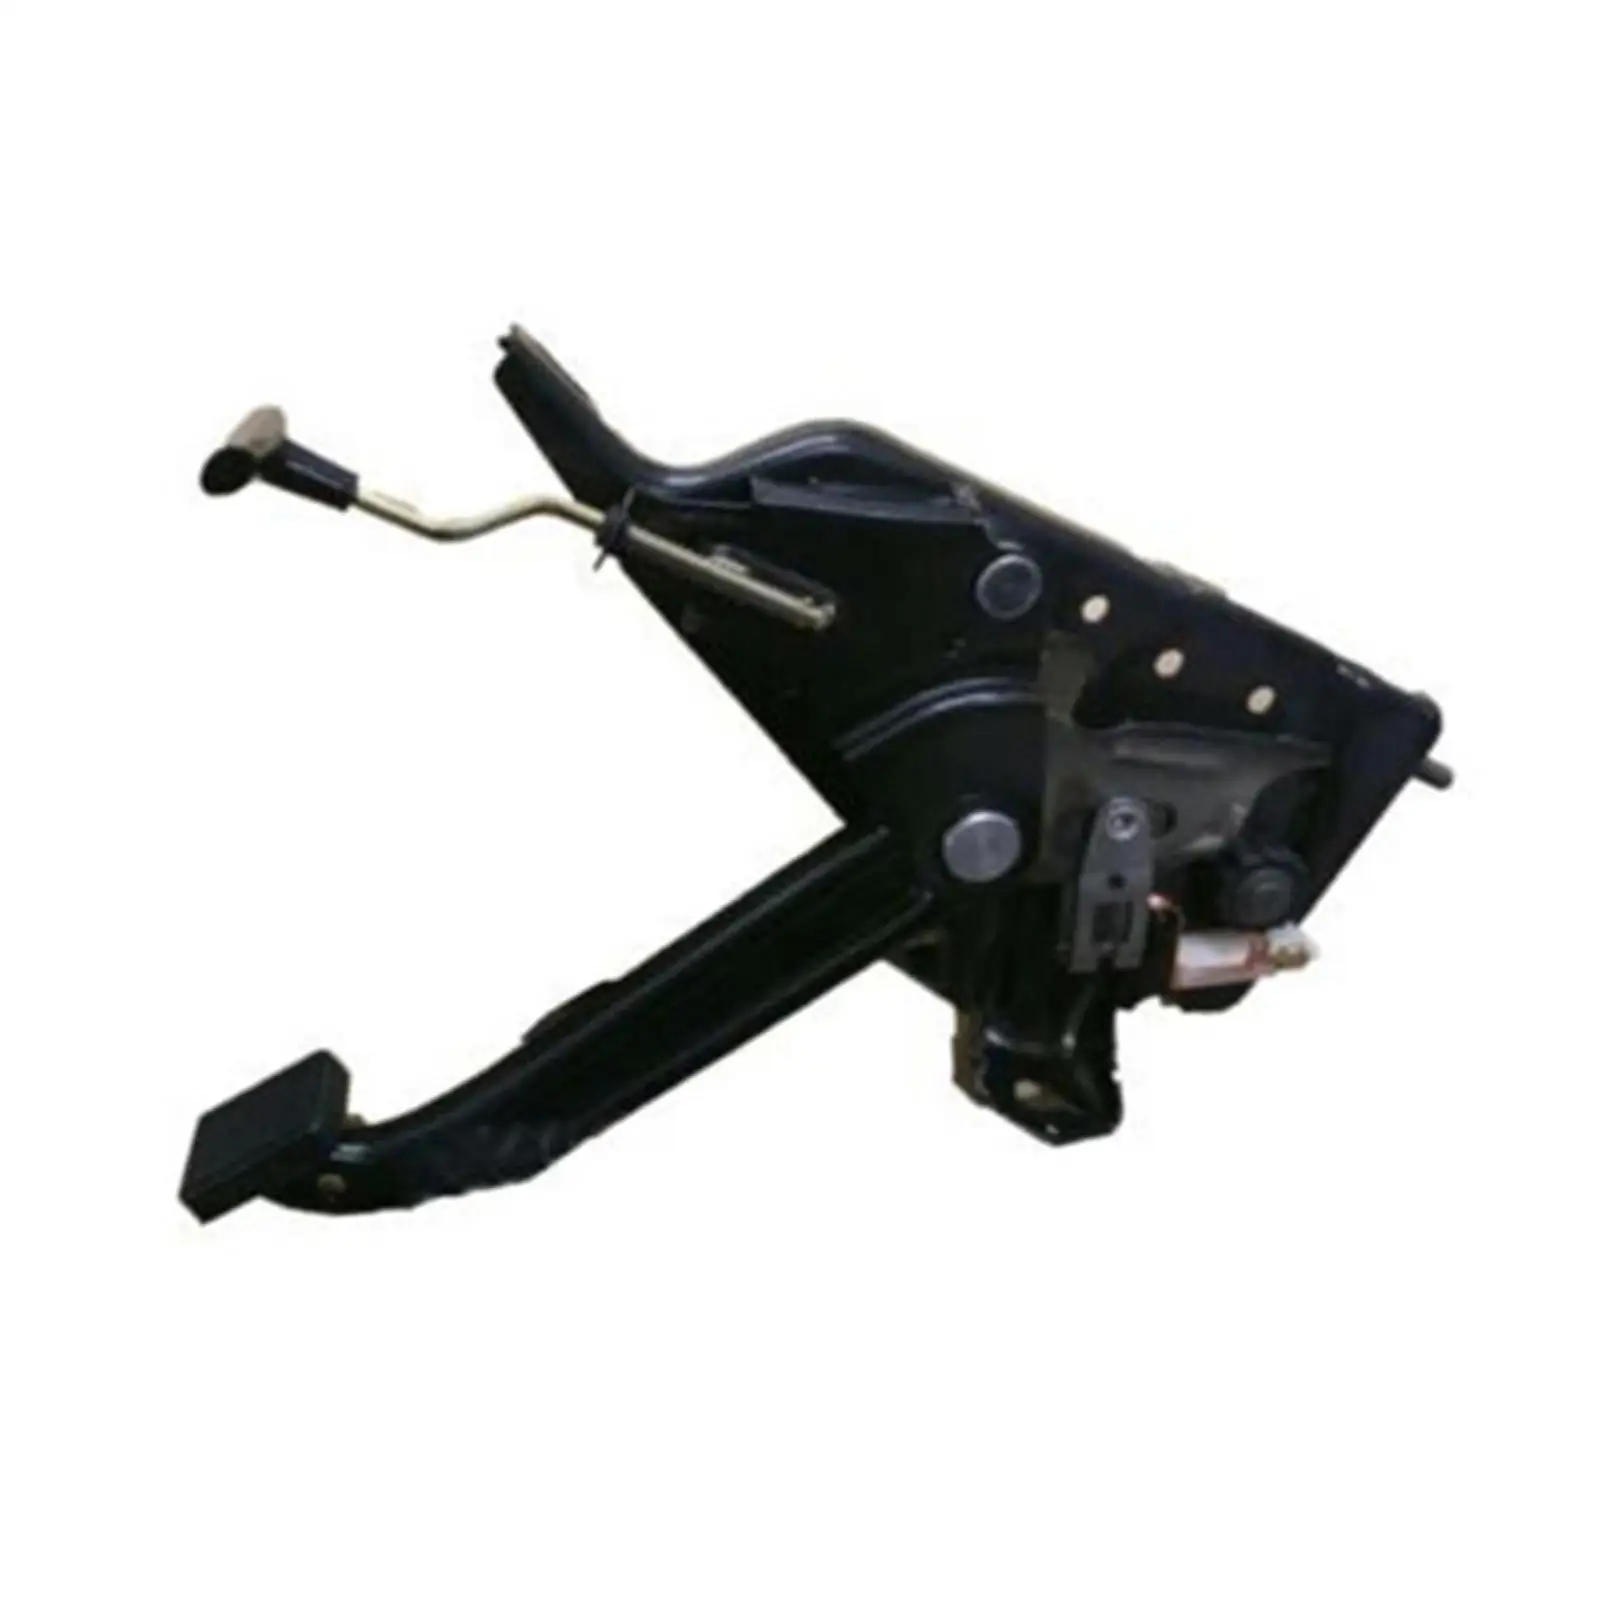 

Parking Emergency Brake Pedal 53009159 52008250 J5363420 for Jeep Wrangler Yj CJ 6 CJ 7 CJ 8 Replacement Easy Installation